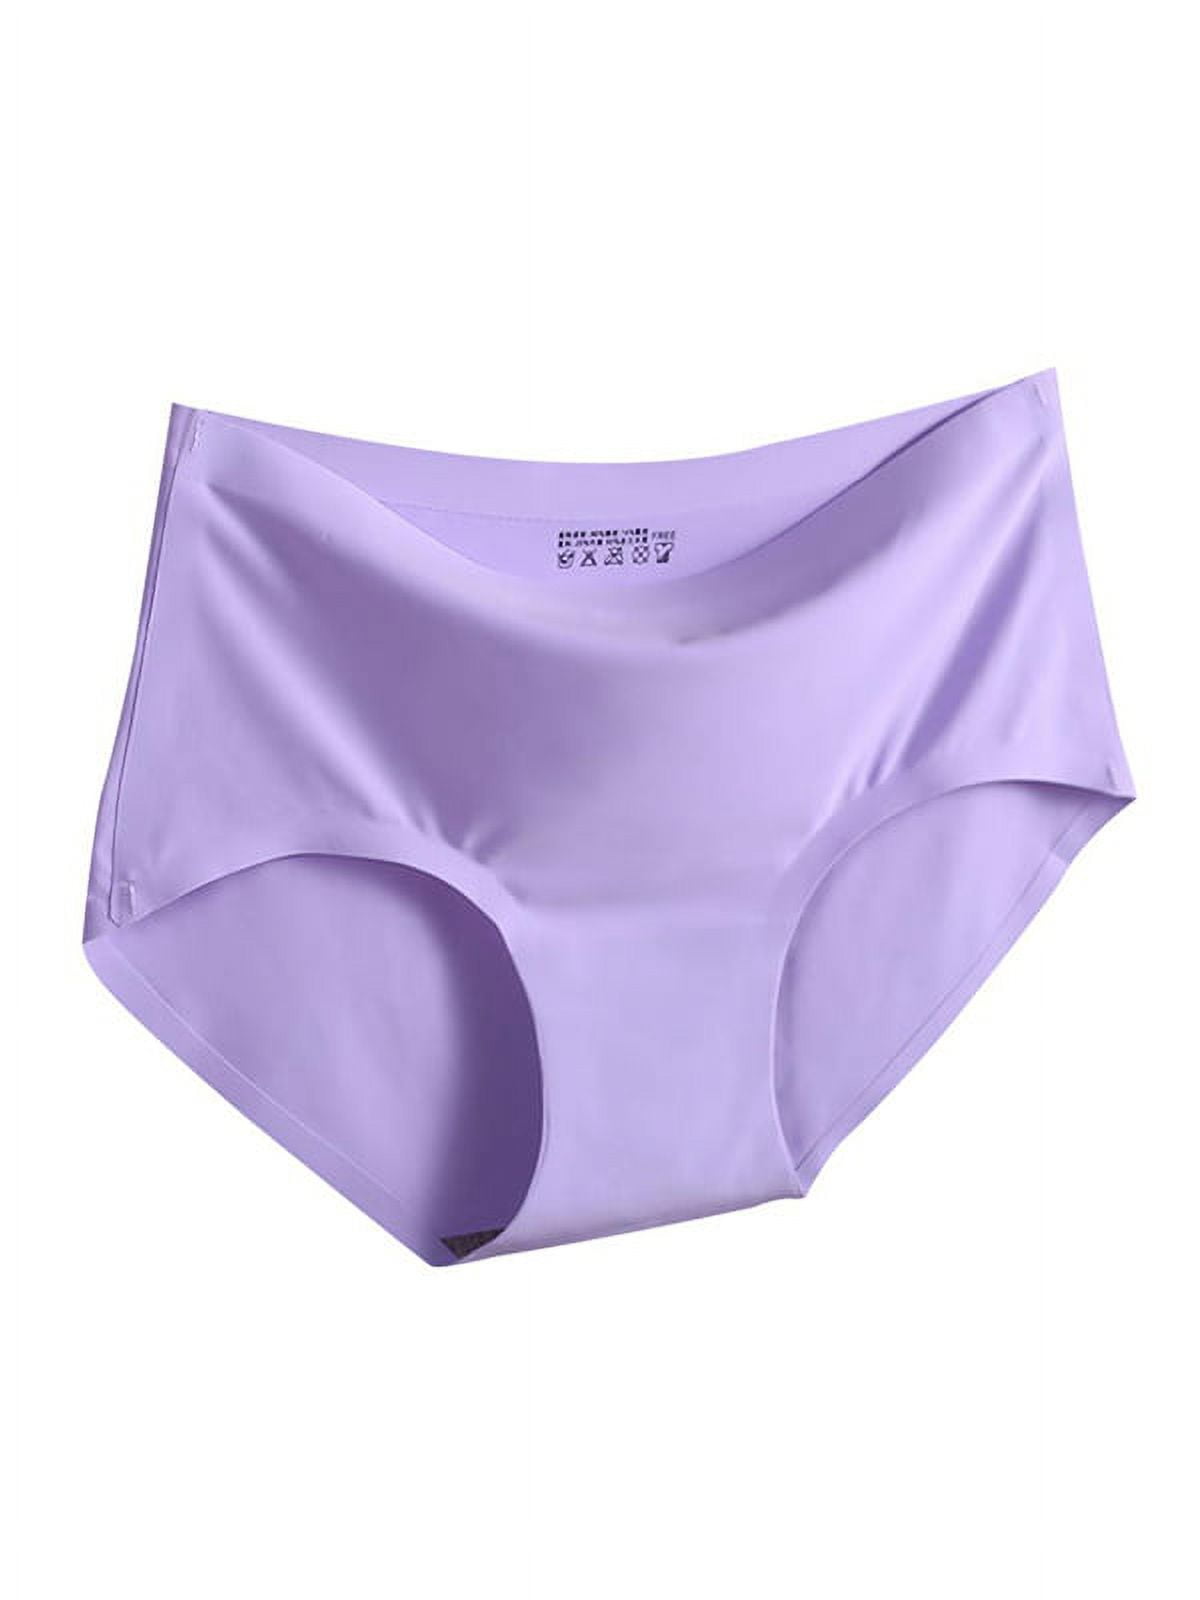 100% silk underwear women's thin middle waist small lace real silk skin  breathable briefs